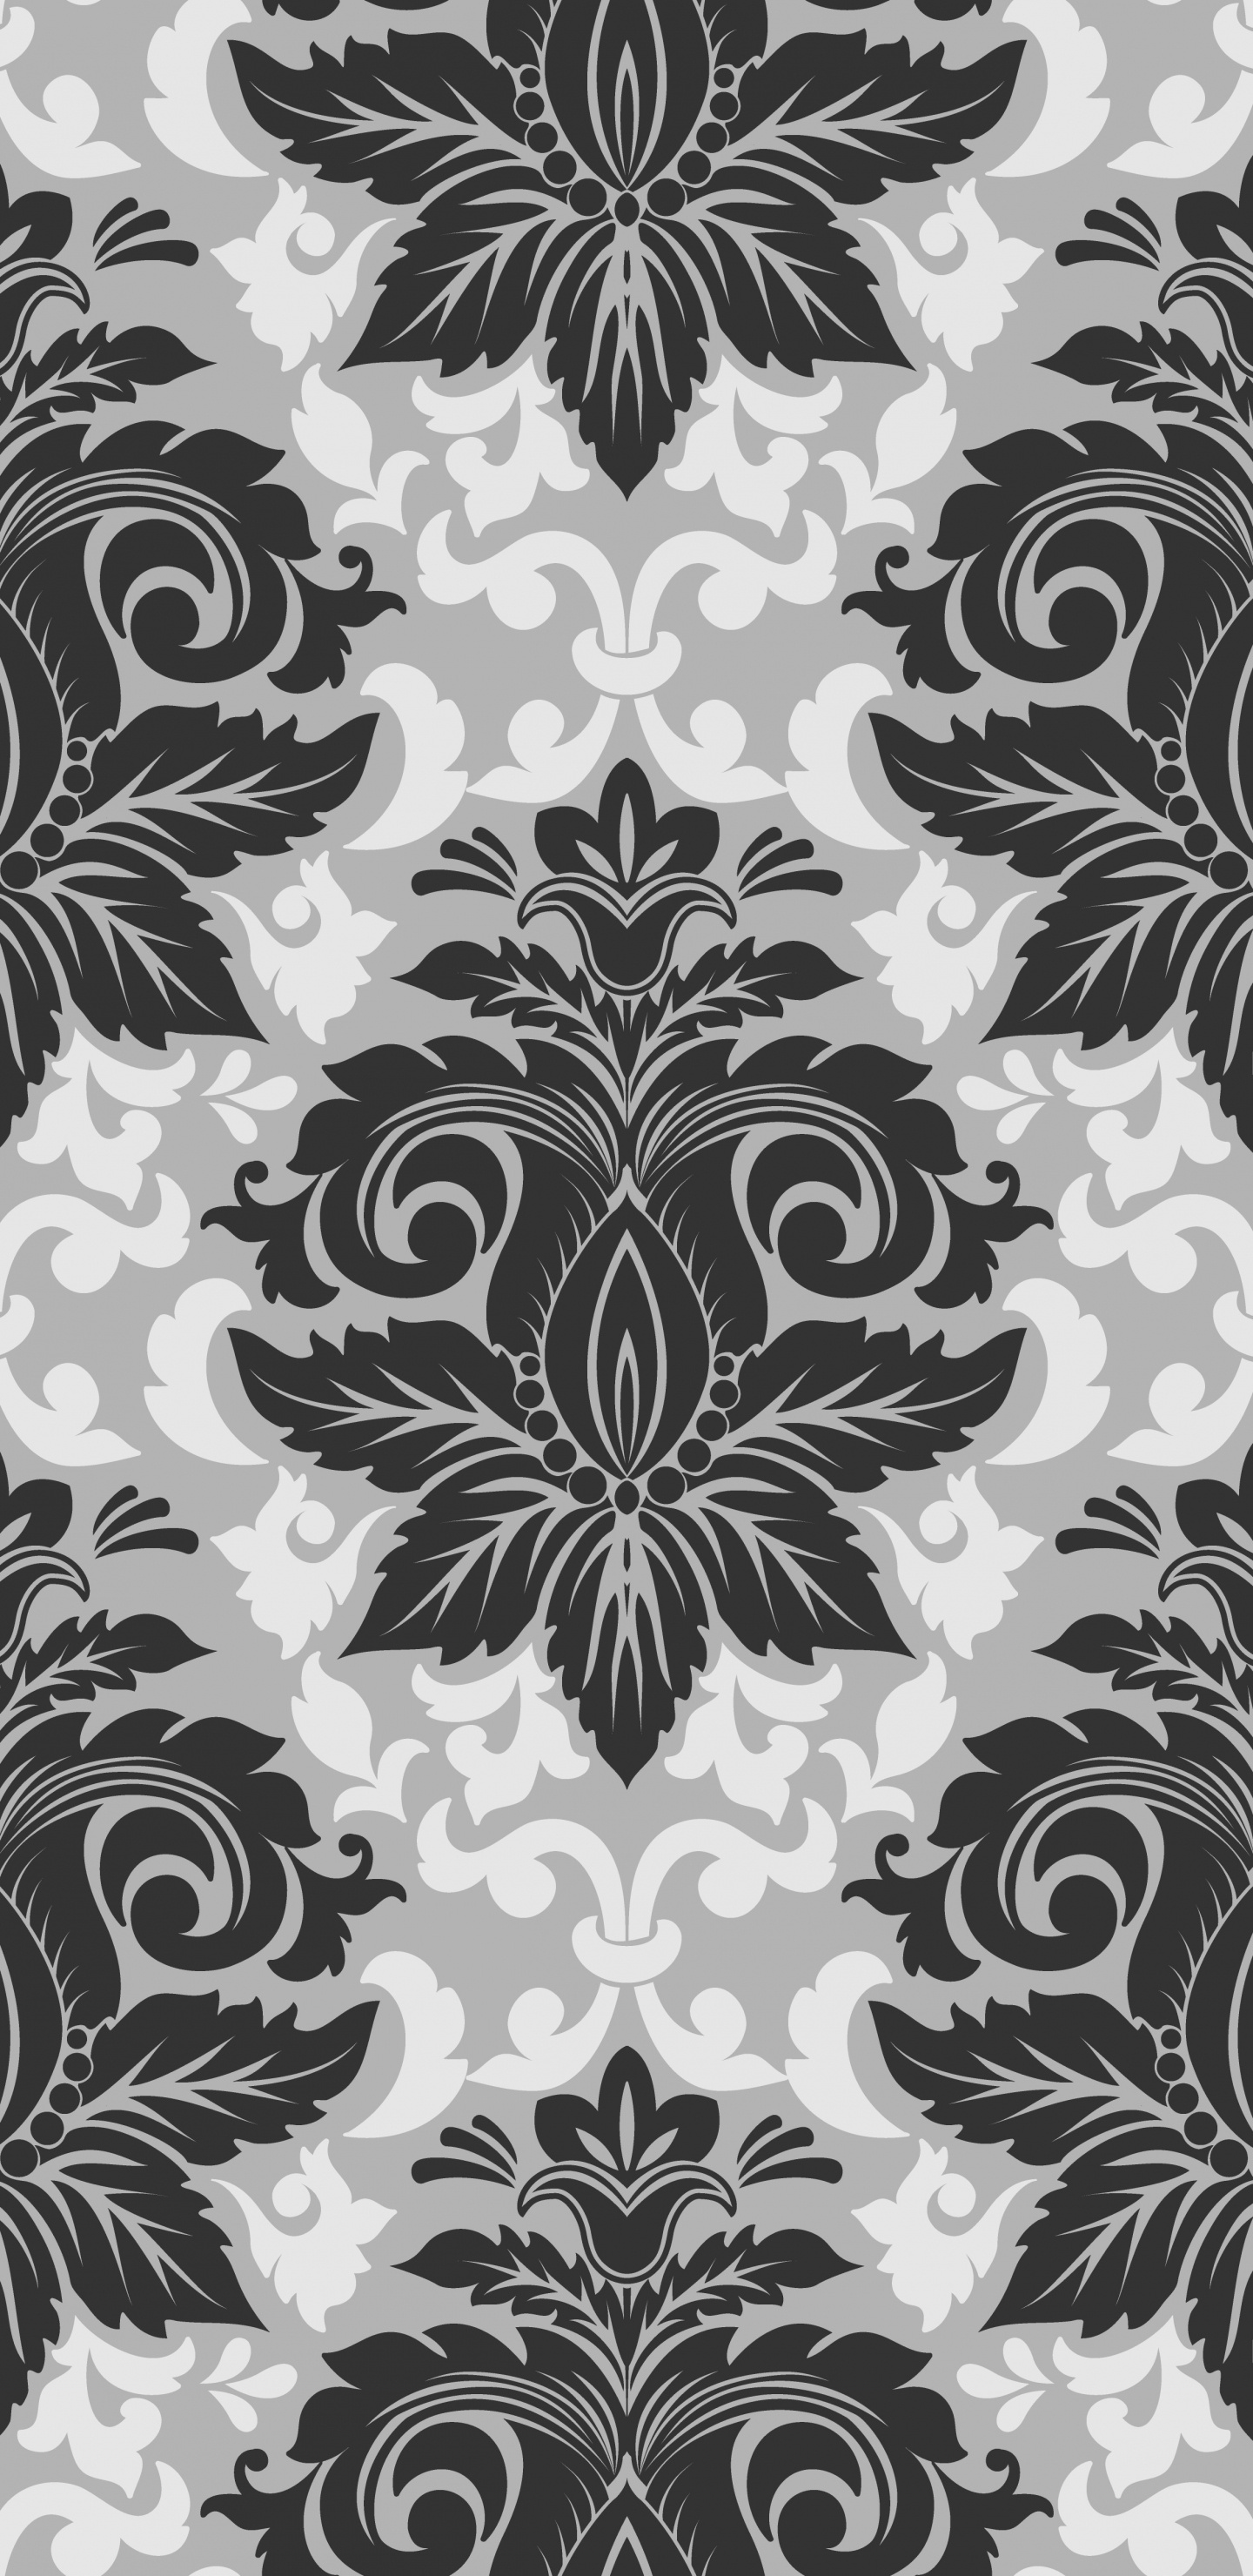 Textil Floral Blanco y Negro. Wallpaper in 1440x2960 Resolution